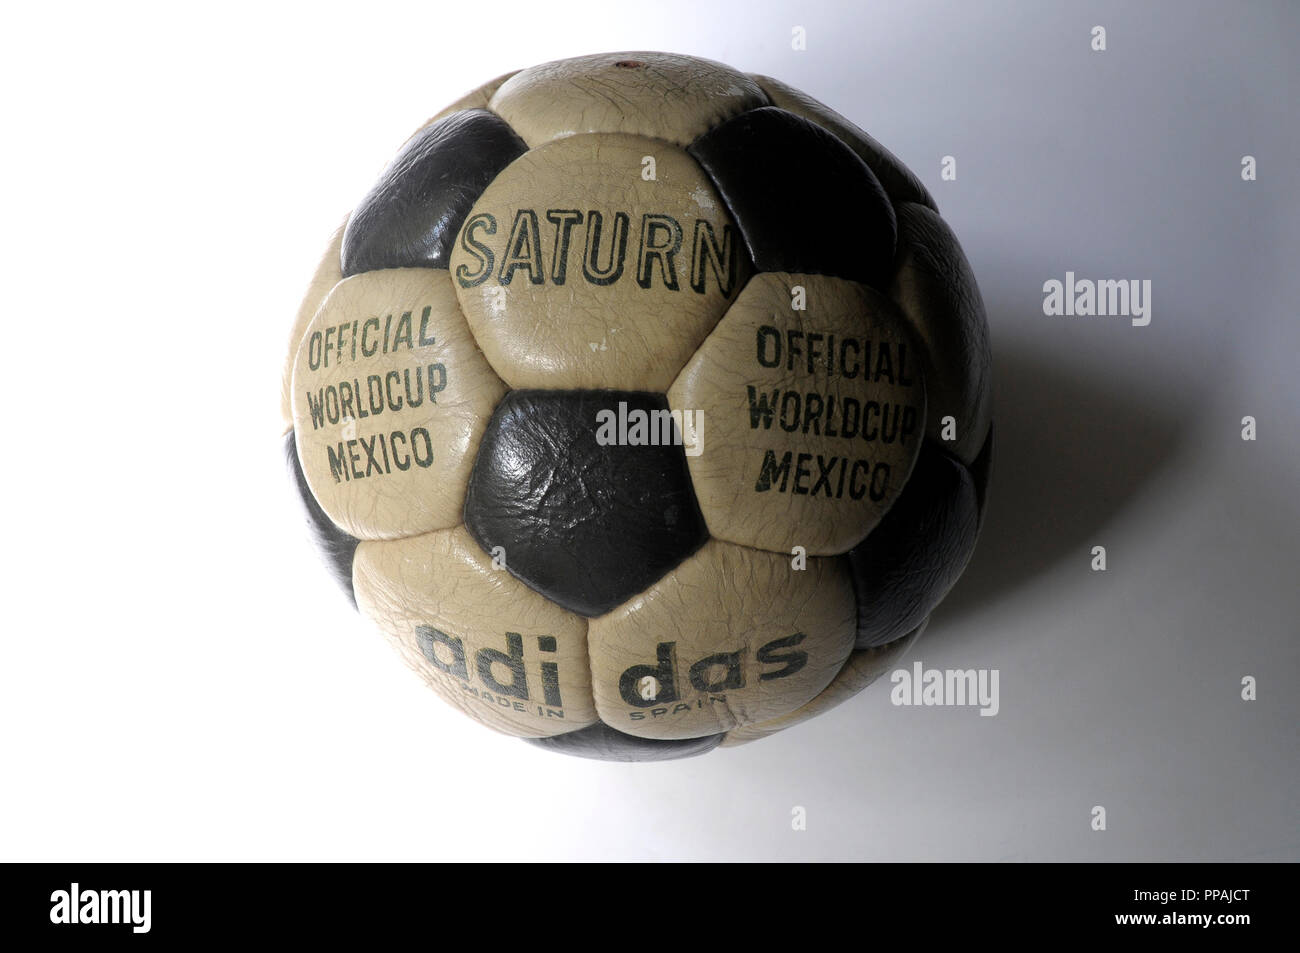 Vintage leather soccer ball Adidas. Made in Spain SATURN, official Worldcup  Mexico. FOOTBALL BALLOON, pelota de futbol Stock Photo - Alamy